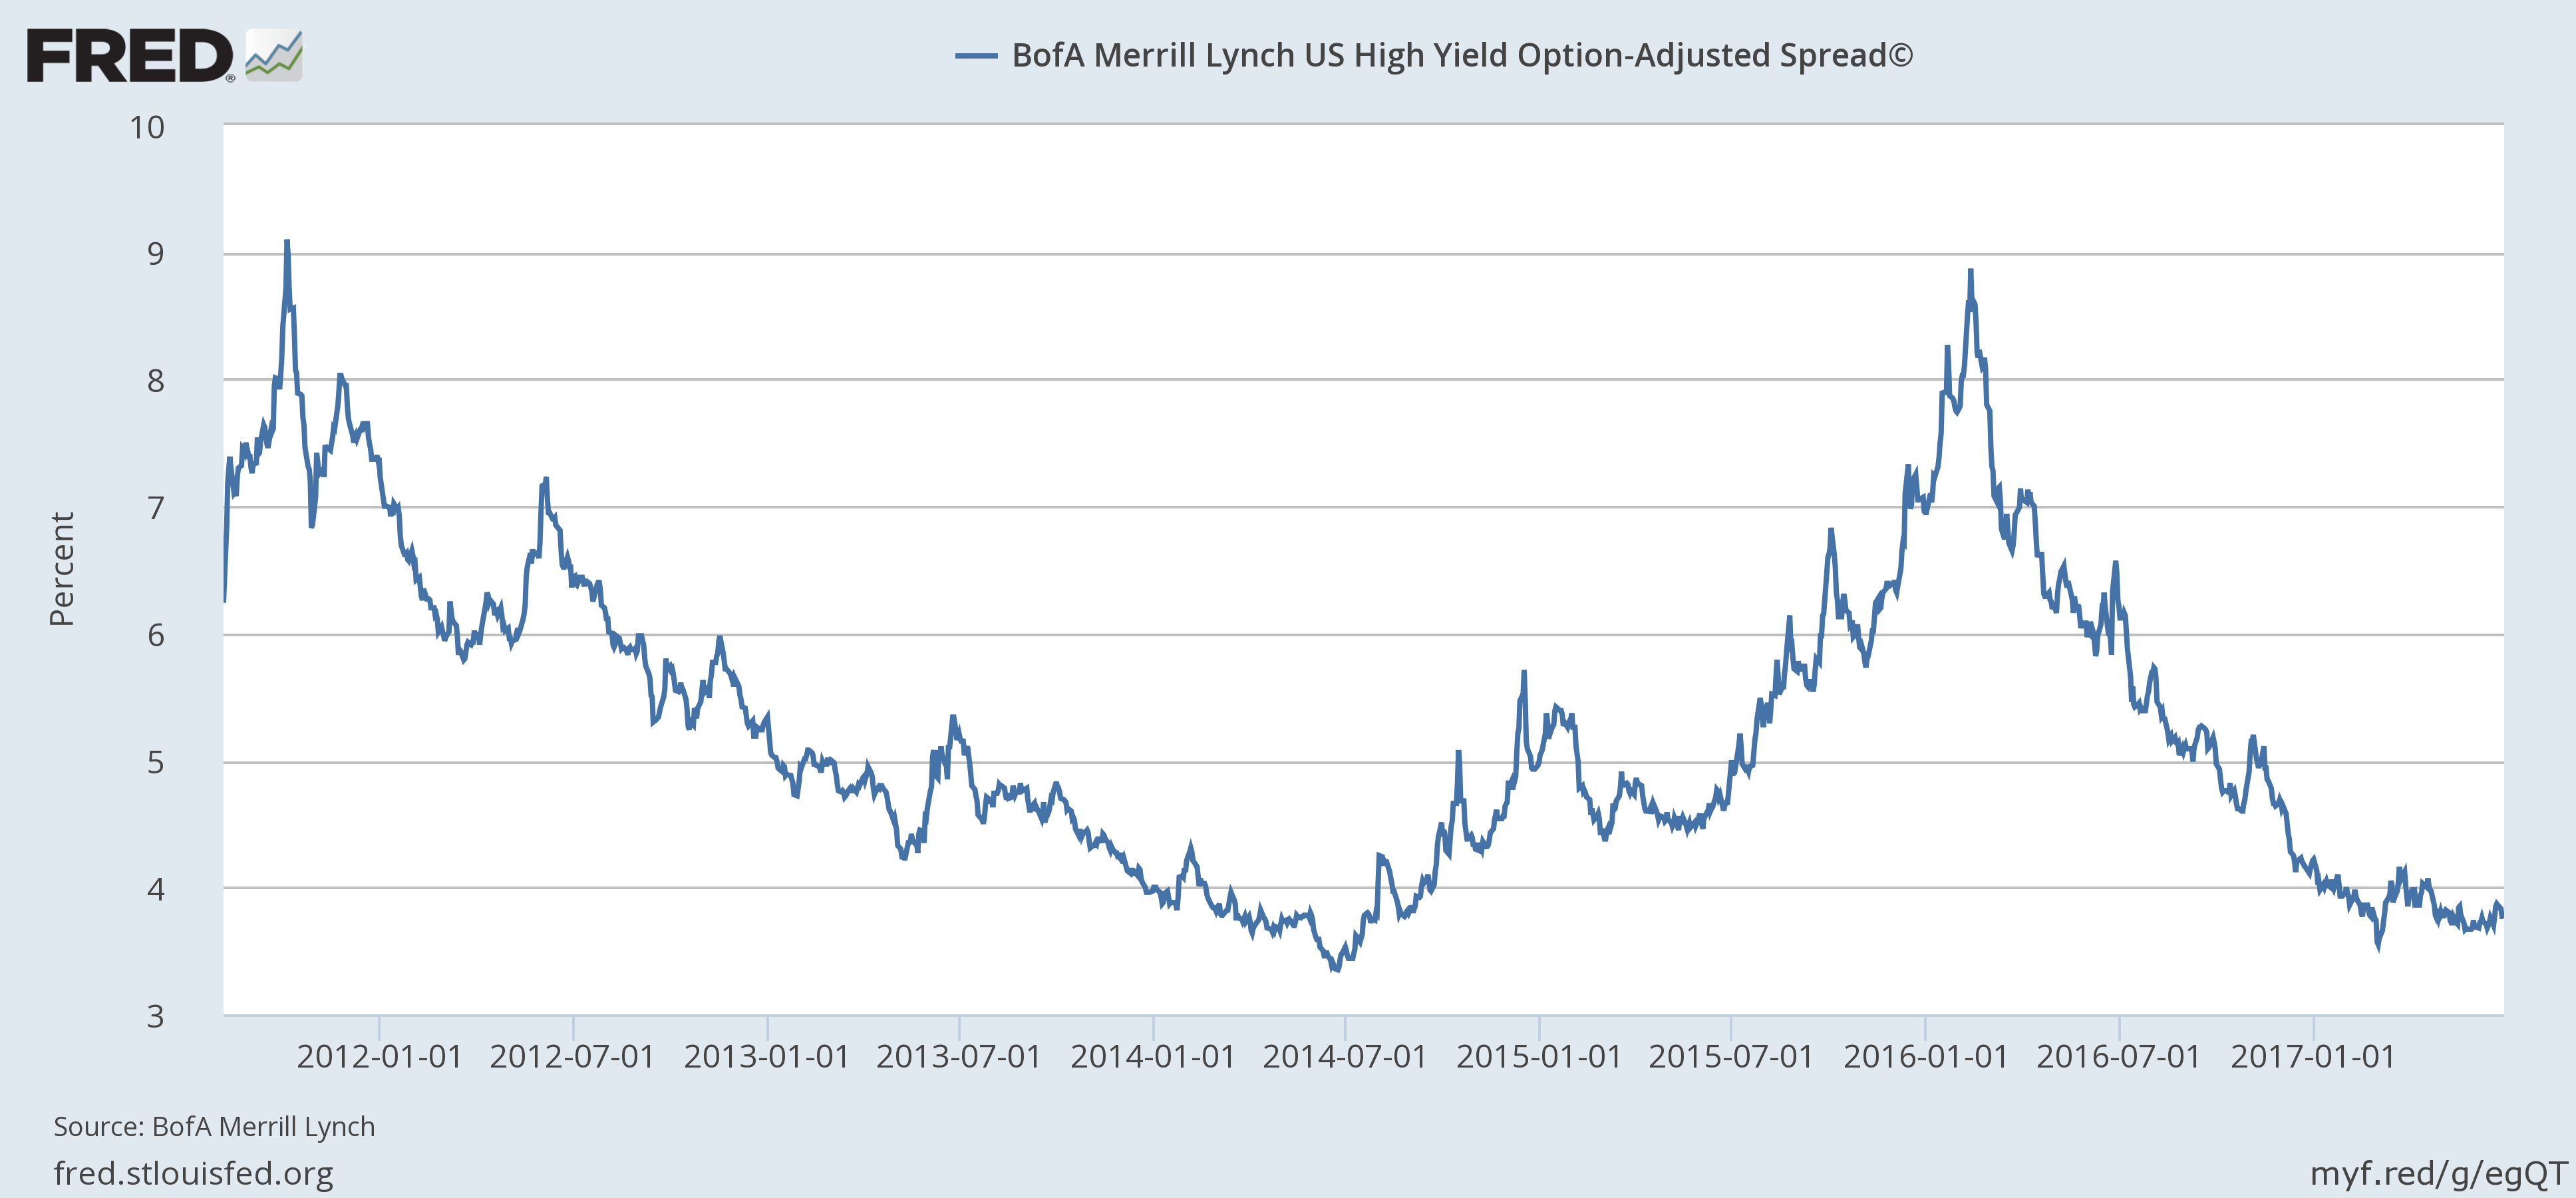 Bofa Merrill Lynch US High Yield